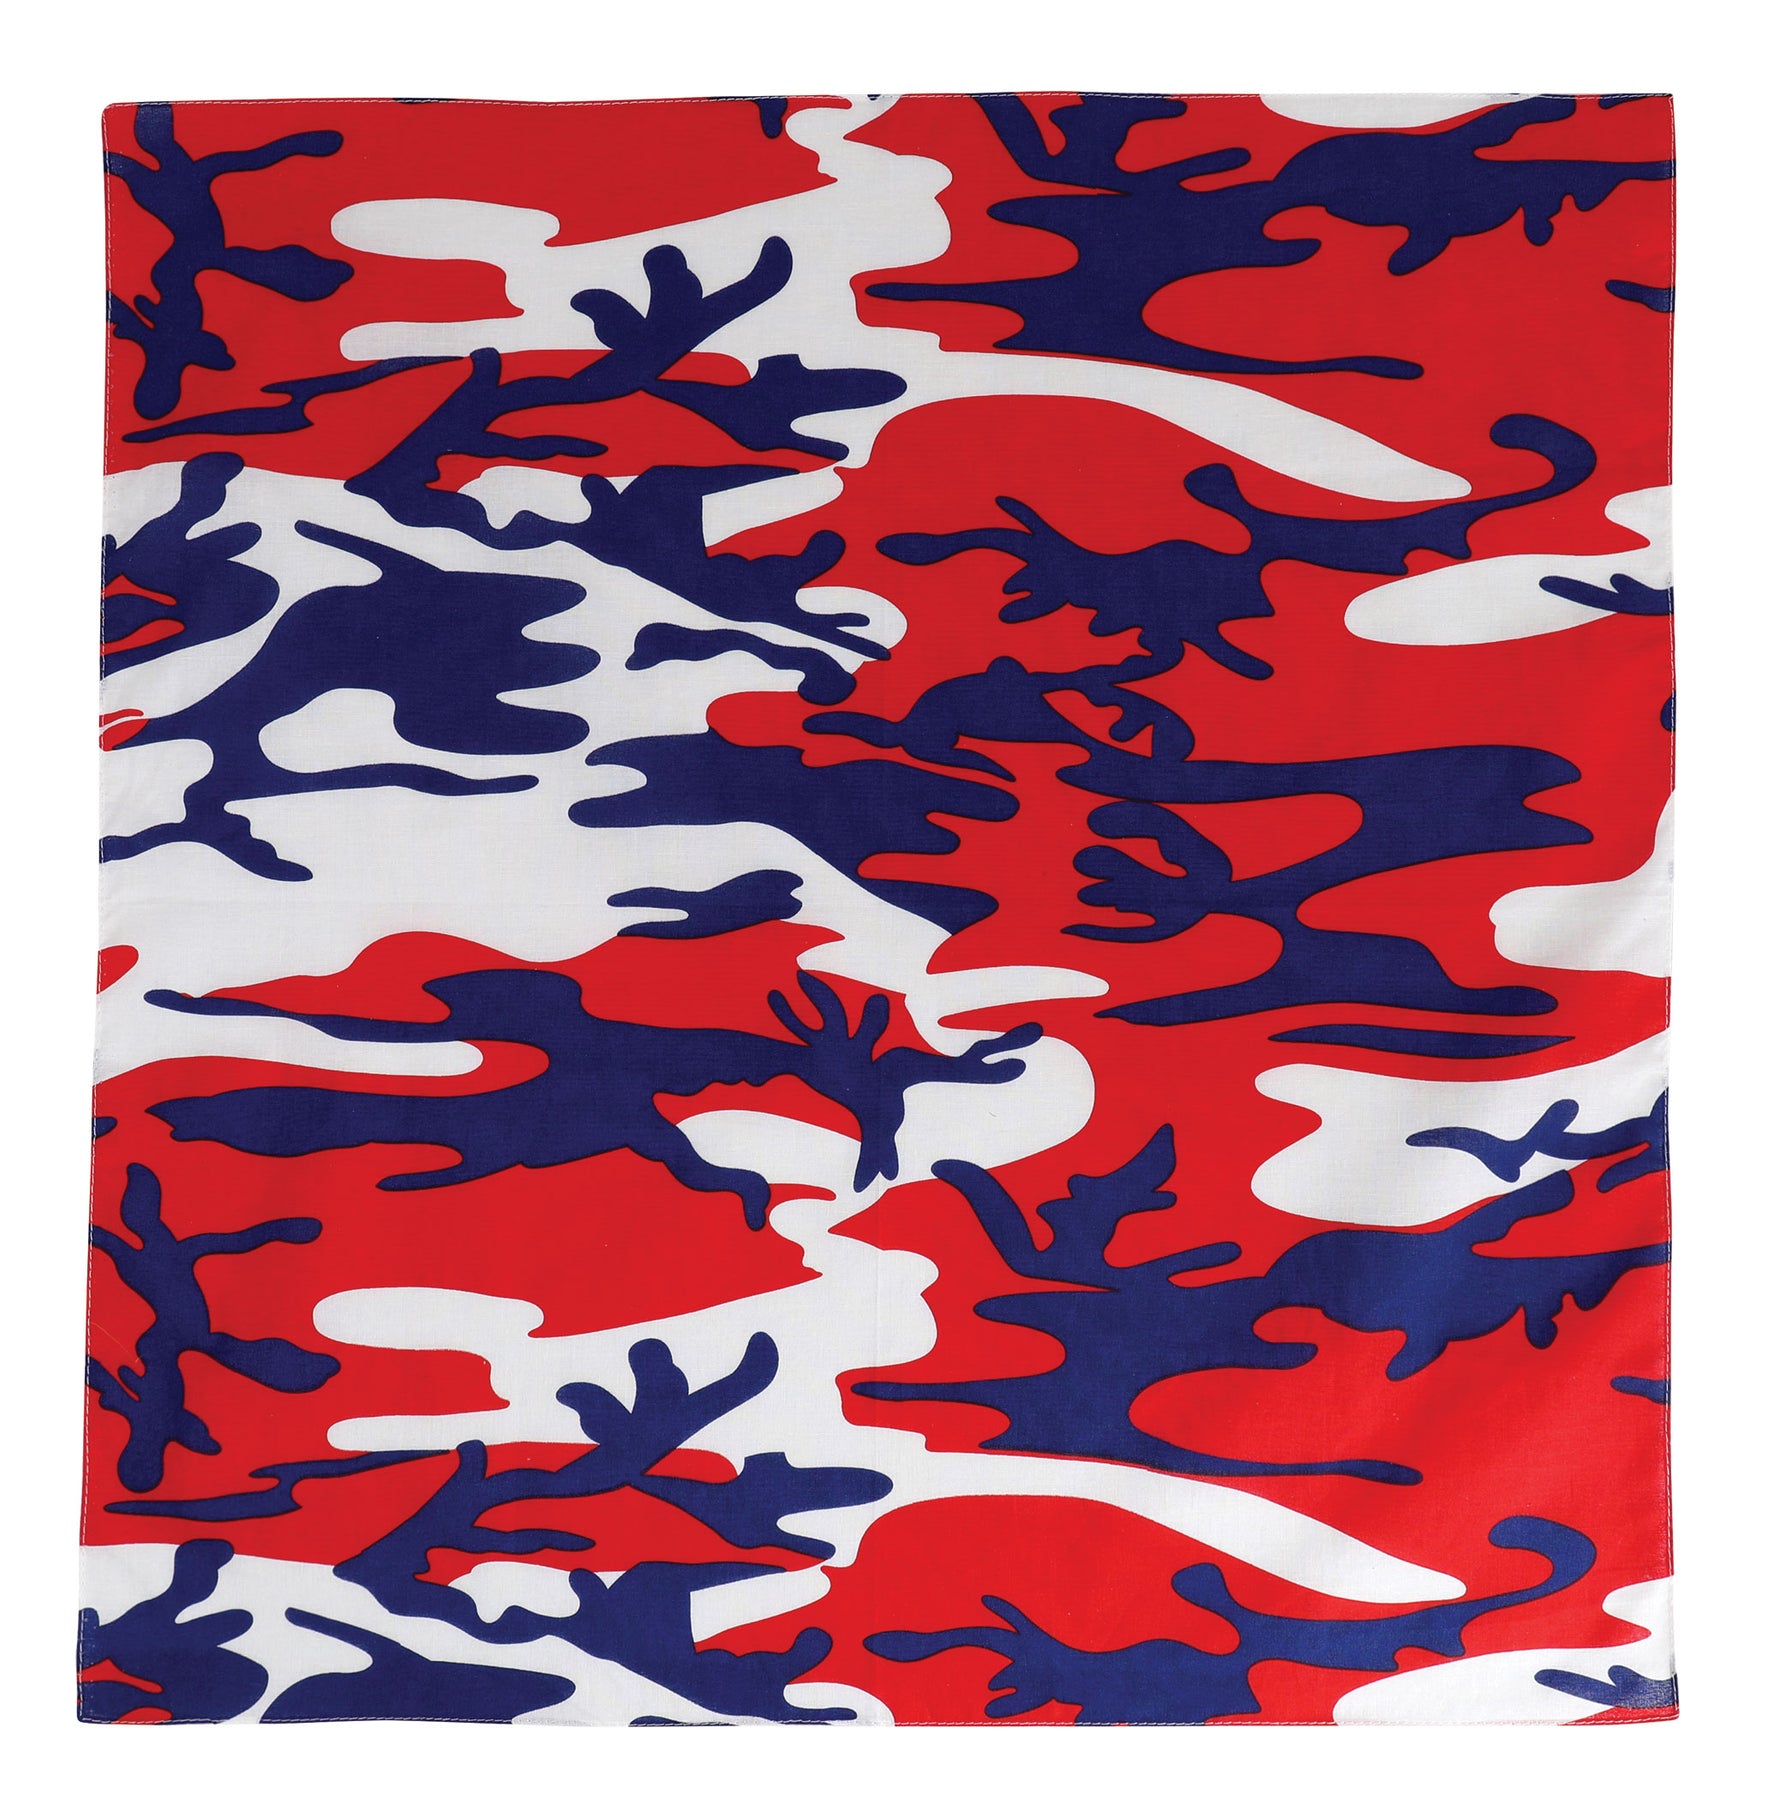  Bandana - Camouflage, Sky Blue Camo, 22-inch by Rothco